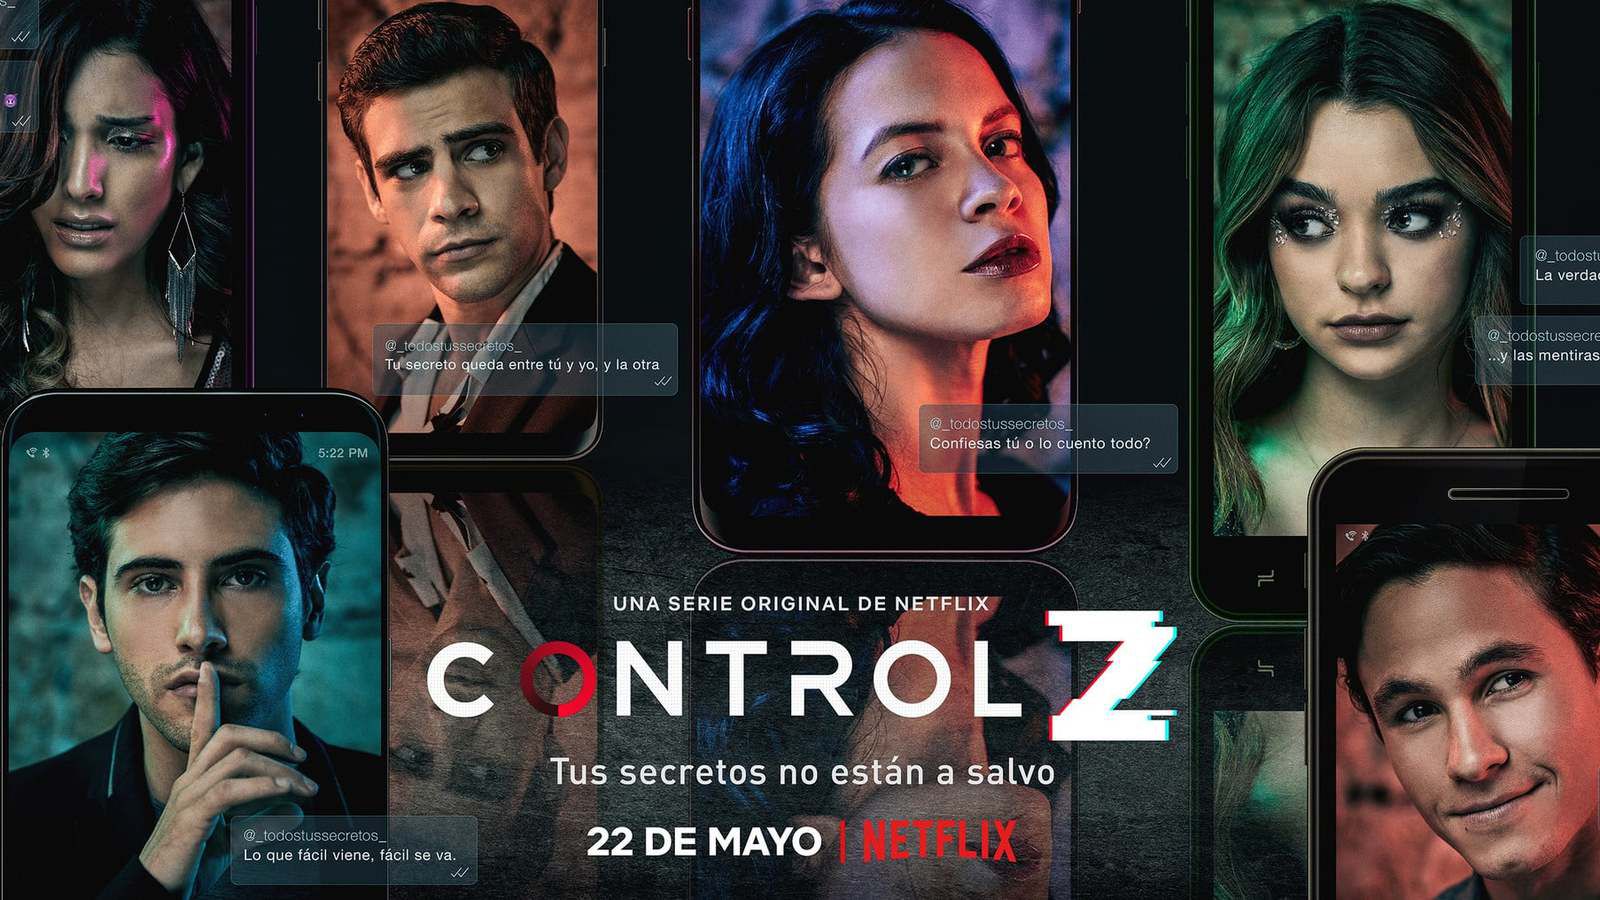 Control Z Season 1 on Netflix